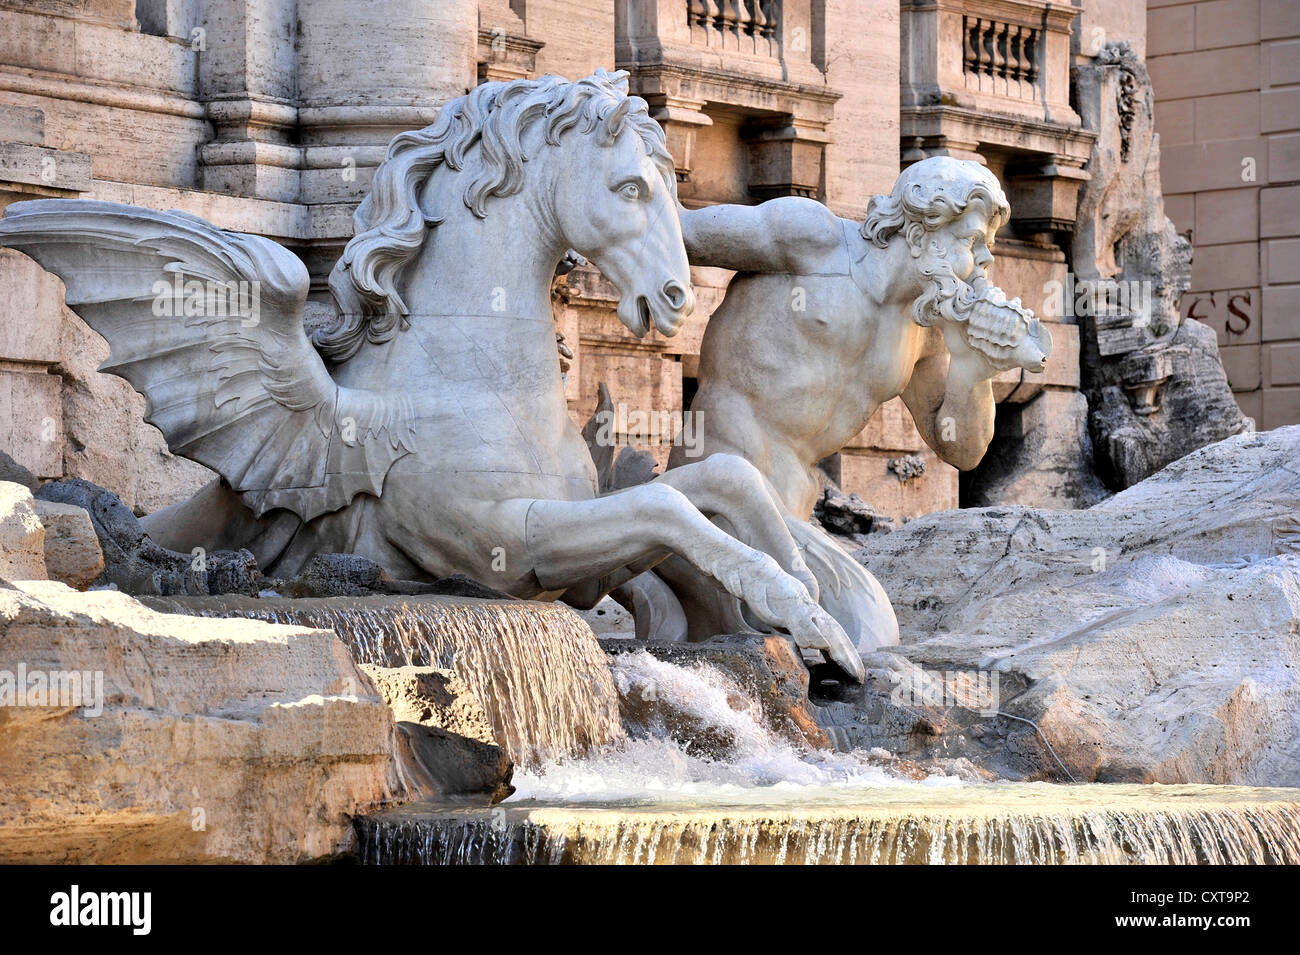 Triton con un caballo alado en la Fontana di Trevi, la Fuente de Trevi, Roma, región de Lazio, Italia, Europa Foto de stock